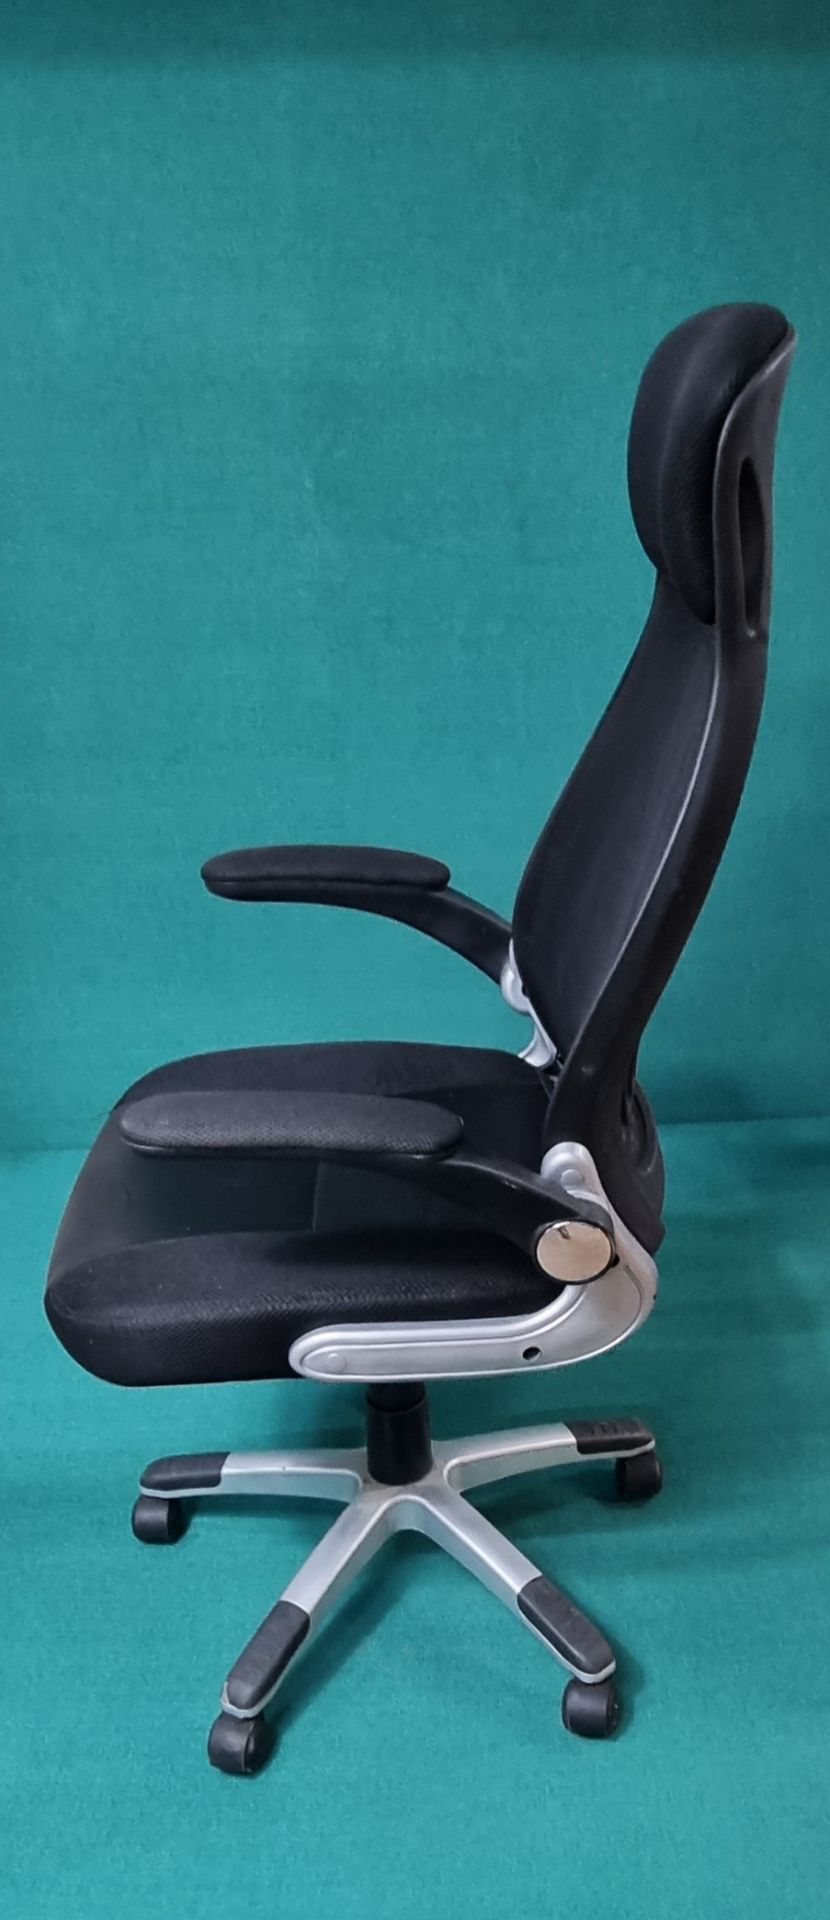 Black/Silver Adjustable Office Desk Chair - Image 3 of 4